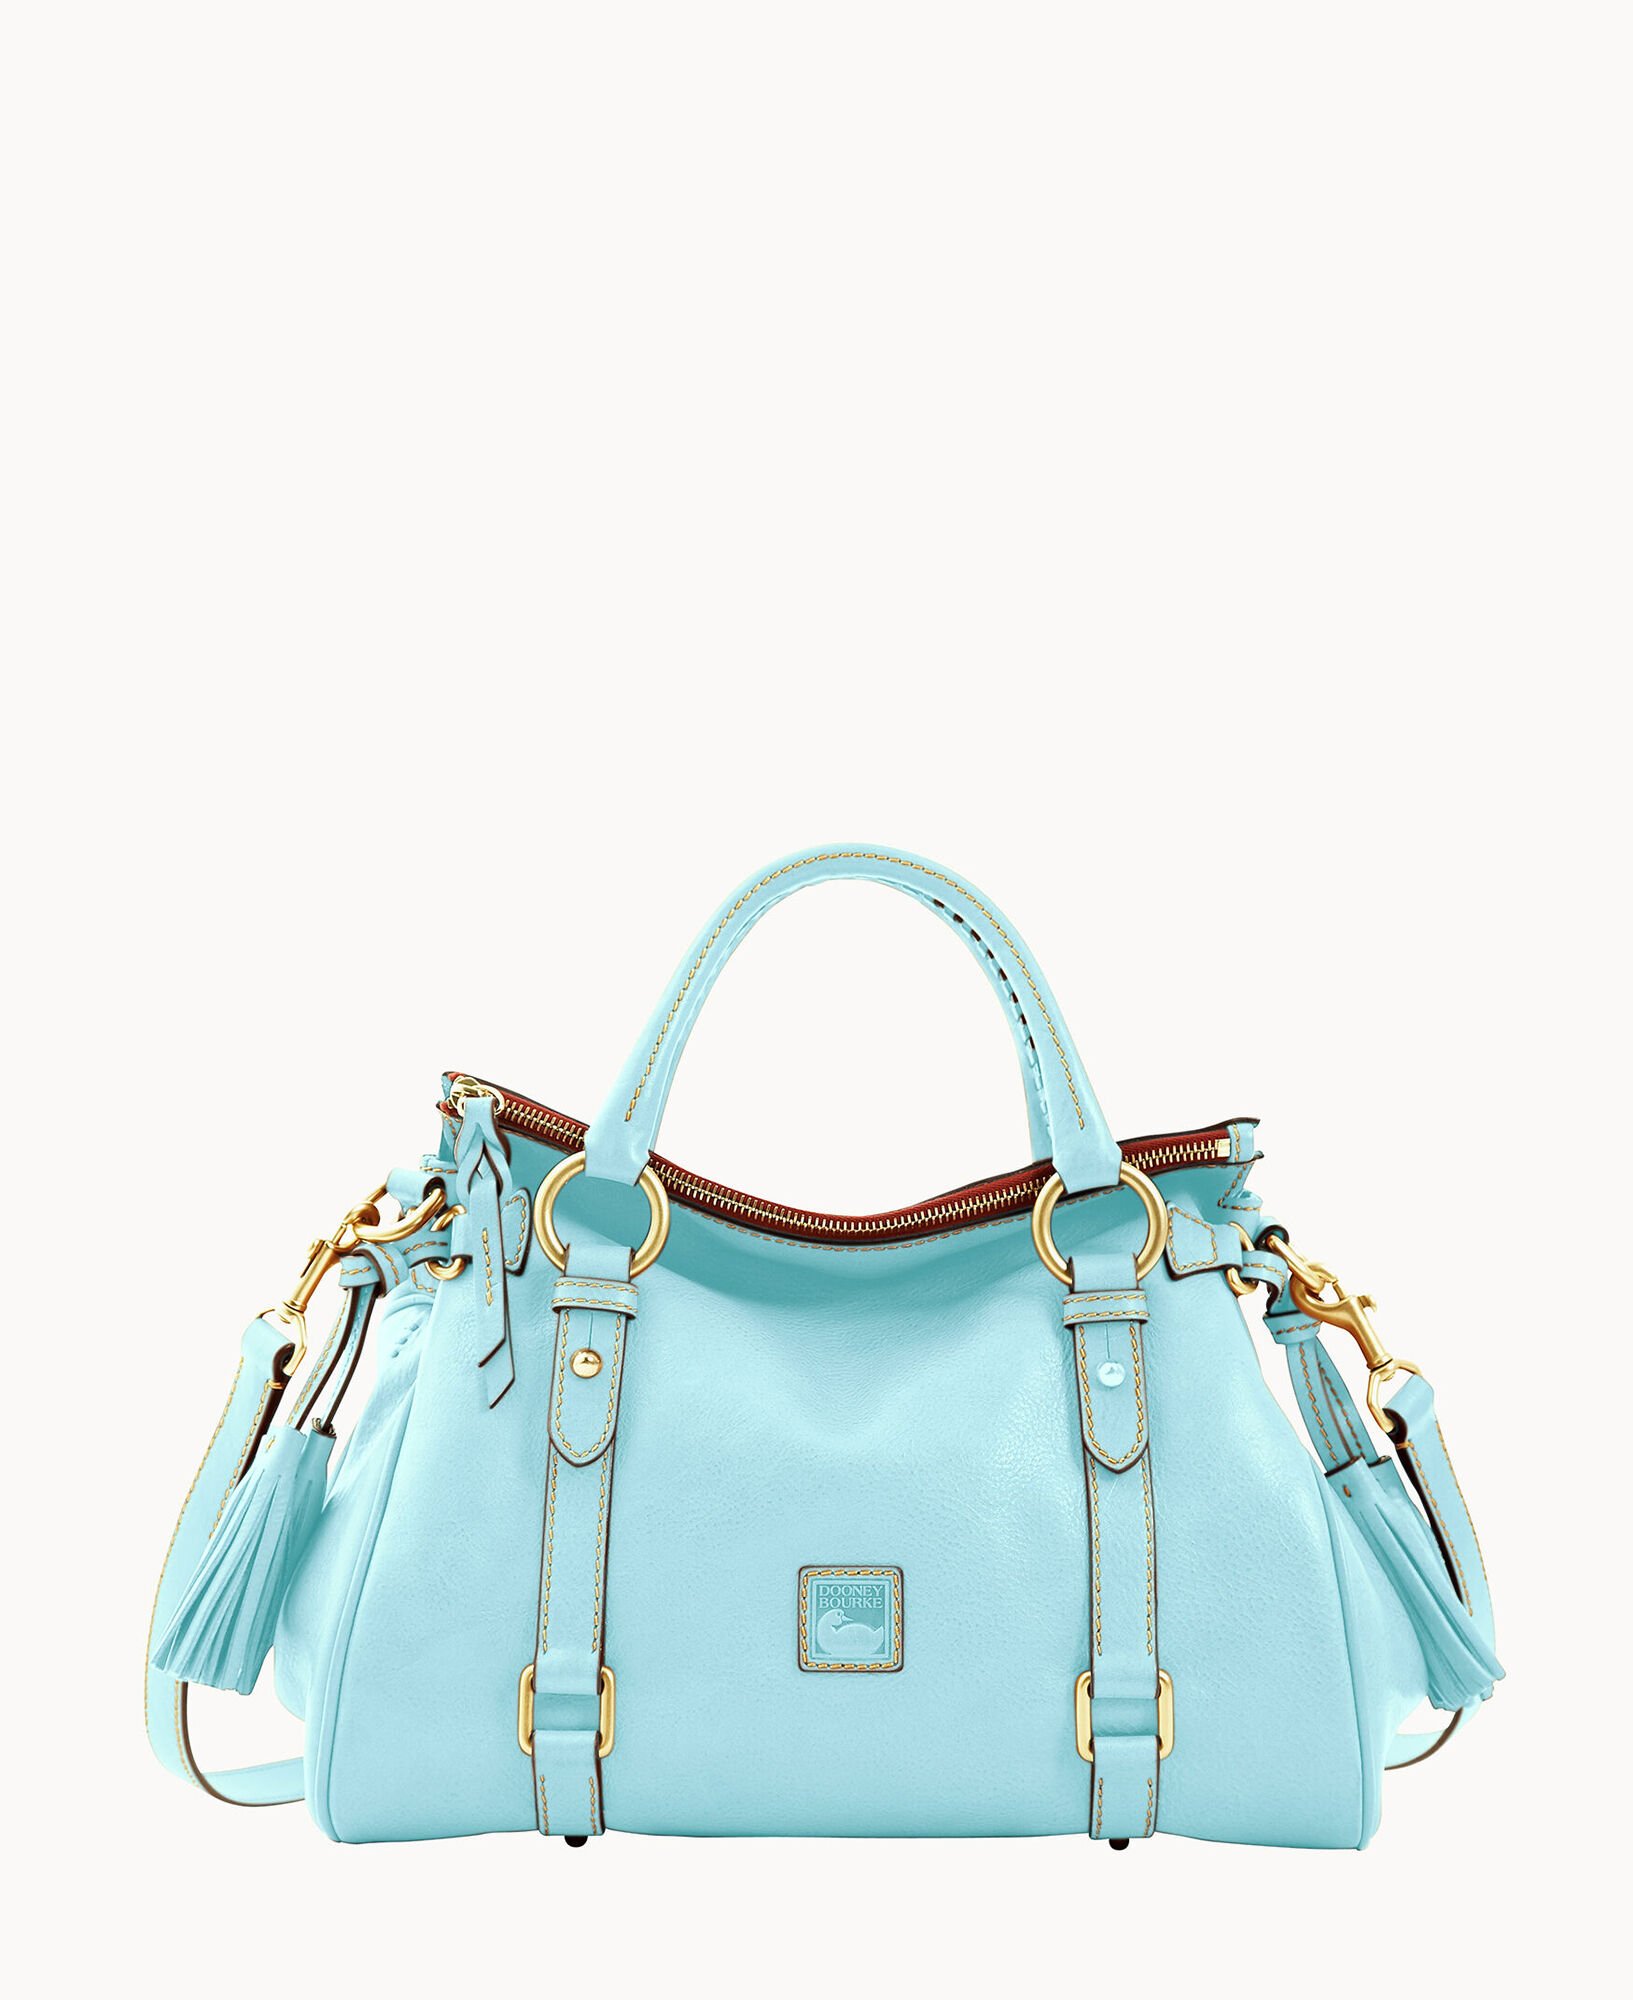 Dooney & Bourke Pale Blue Satchel Florentine Leather Handbag 